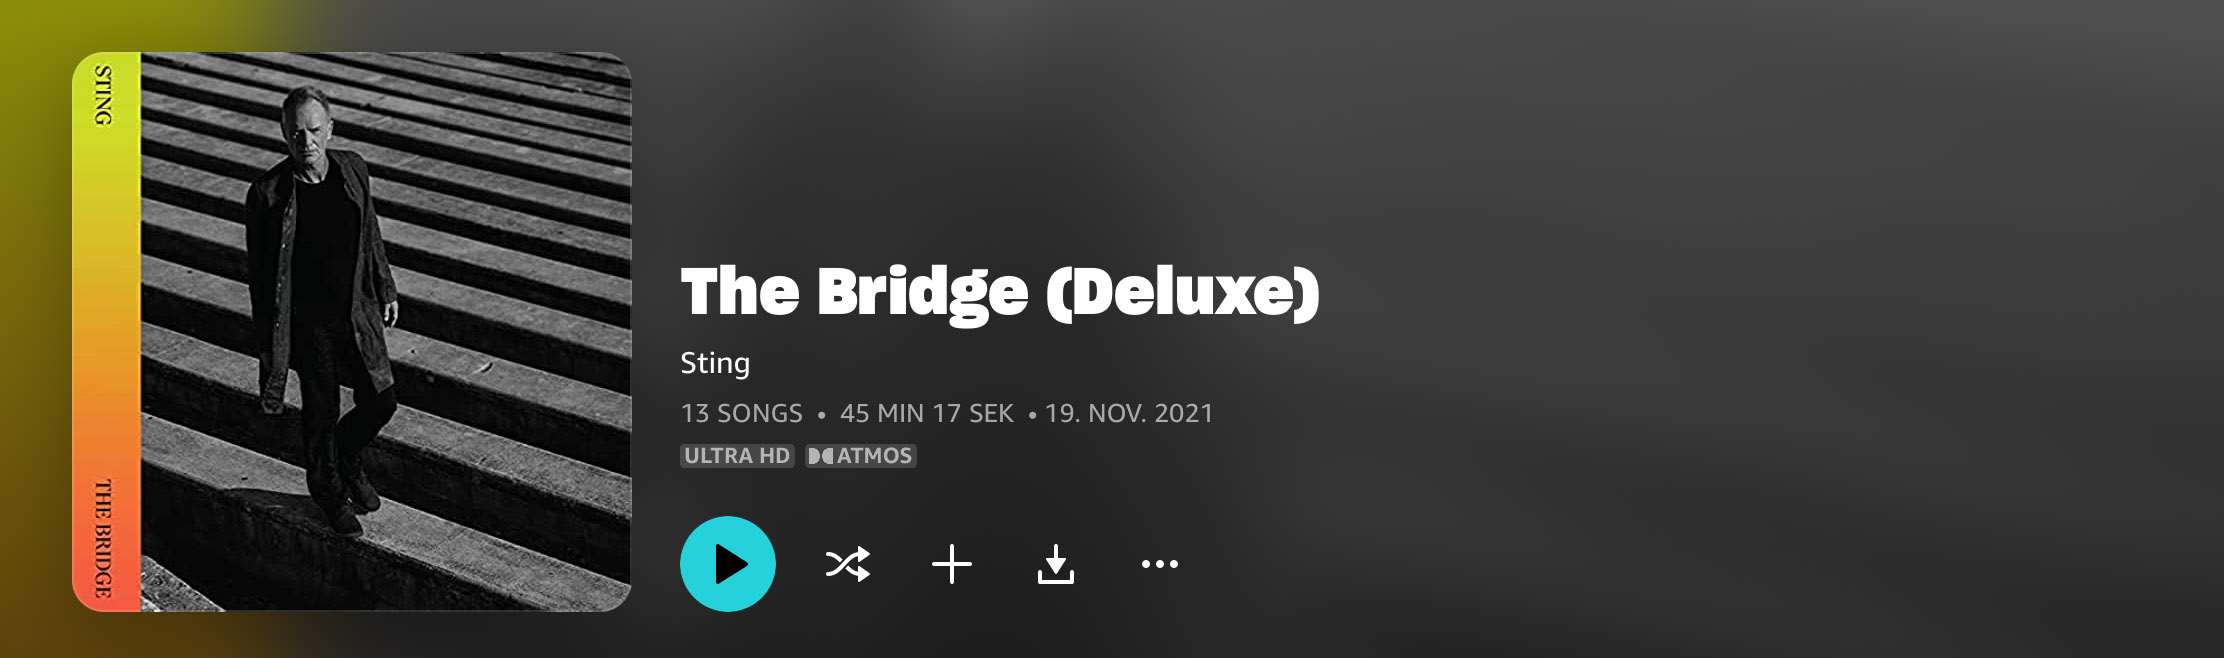 Sting The Bridge Dolby Atmos